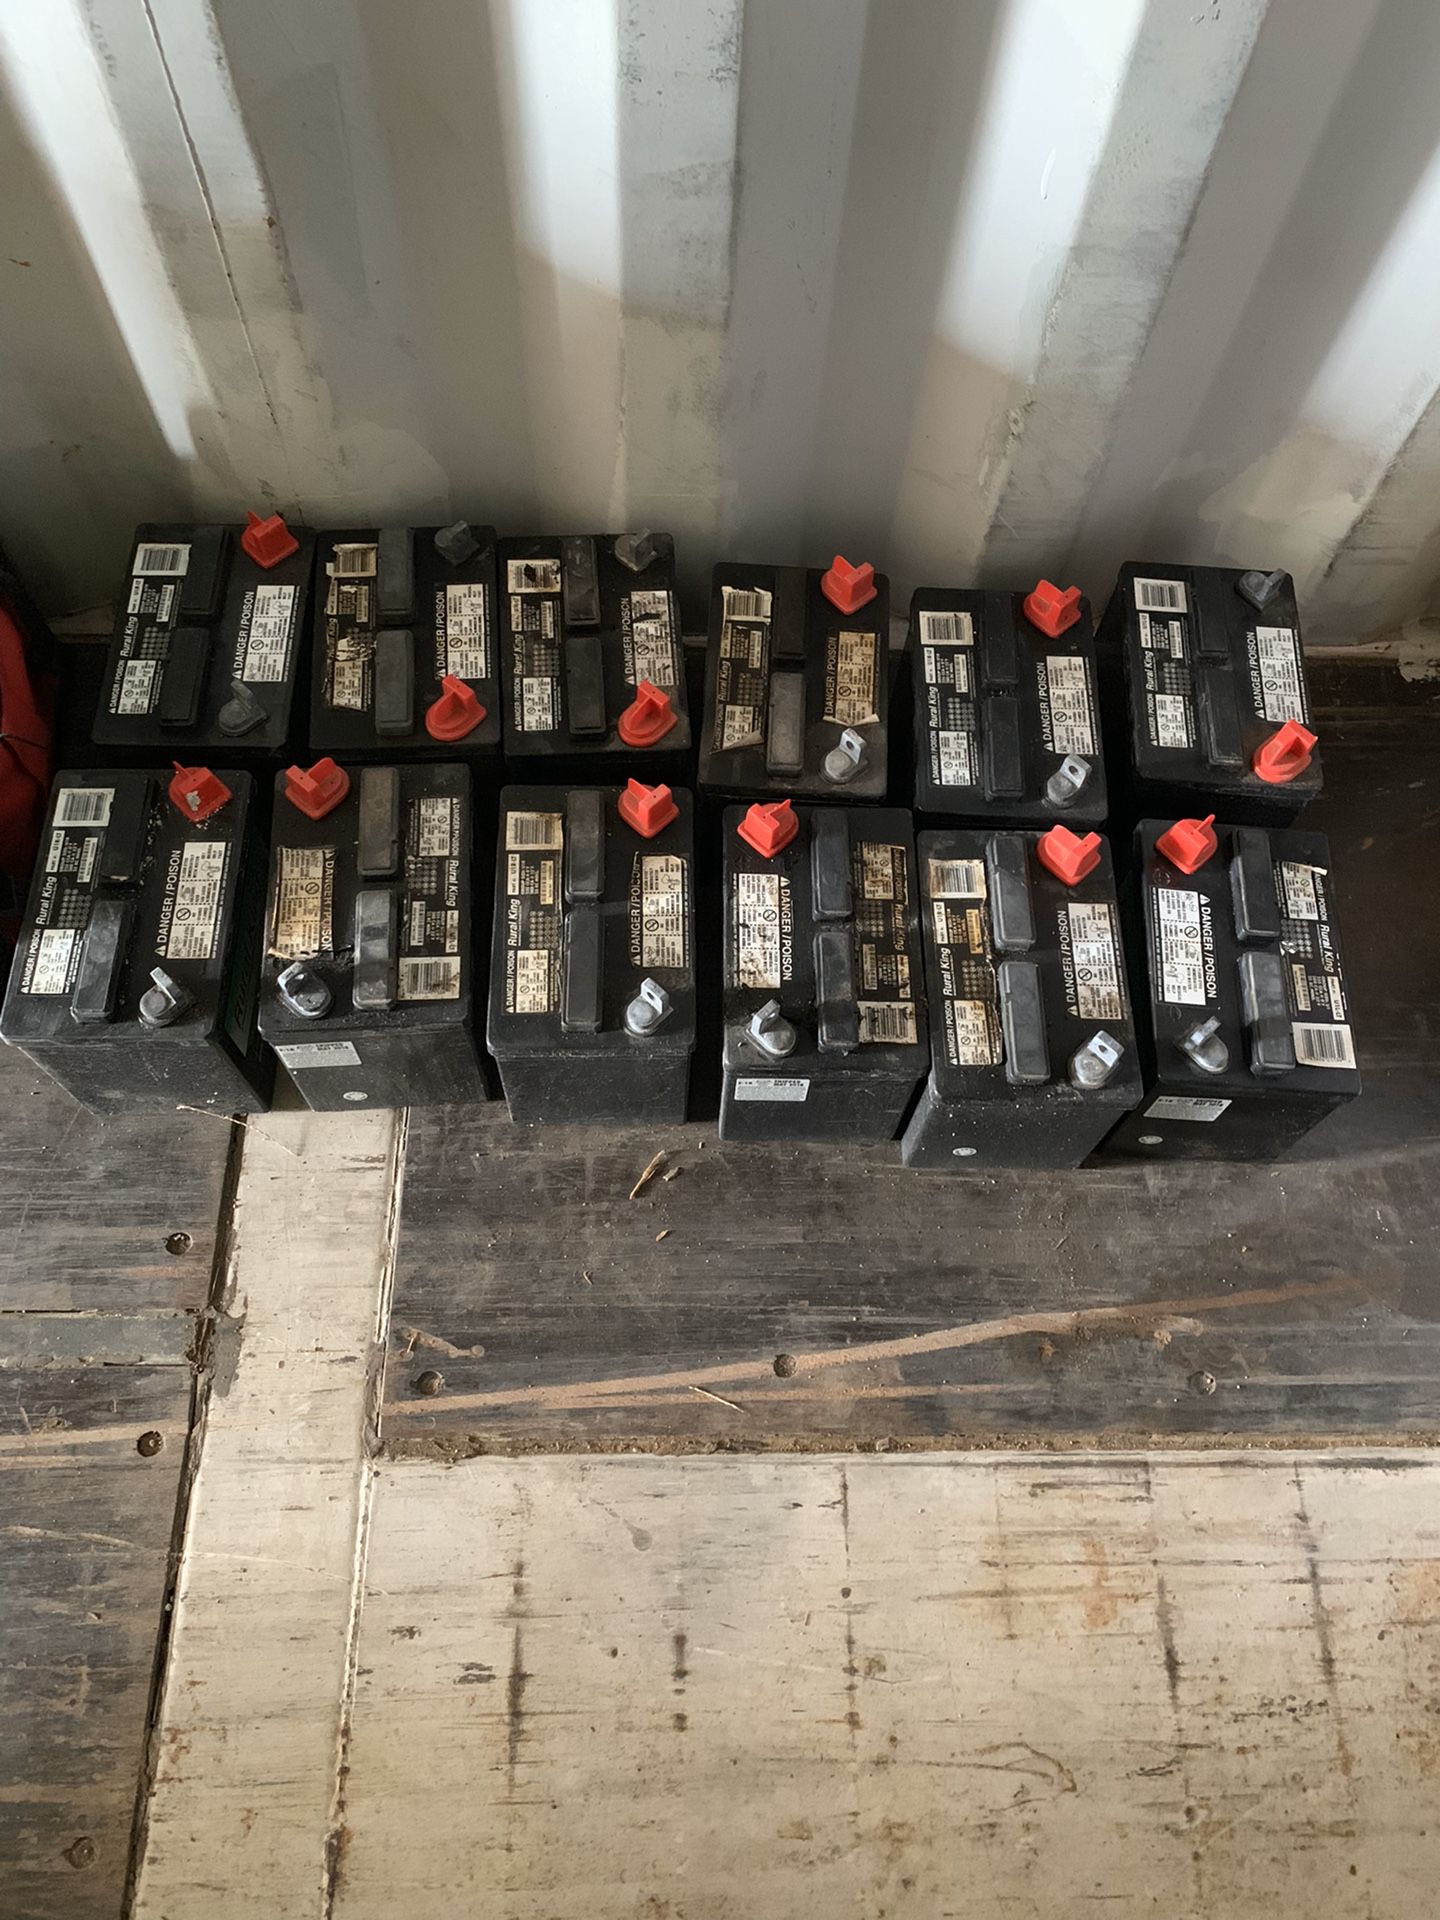 (12) New 12 volt Lawnmower Batteries Rural King Brand